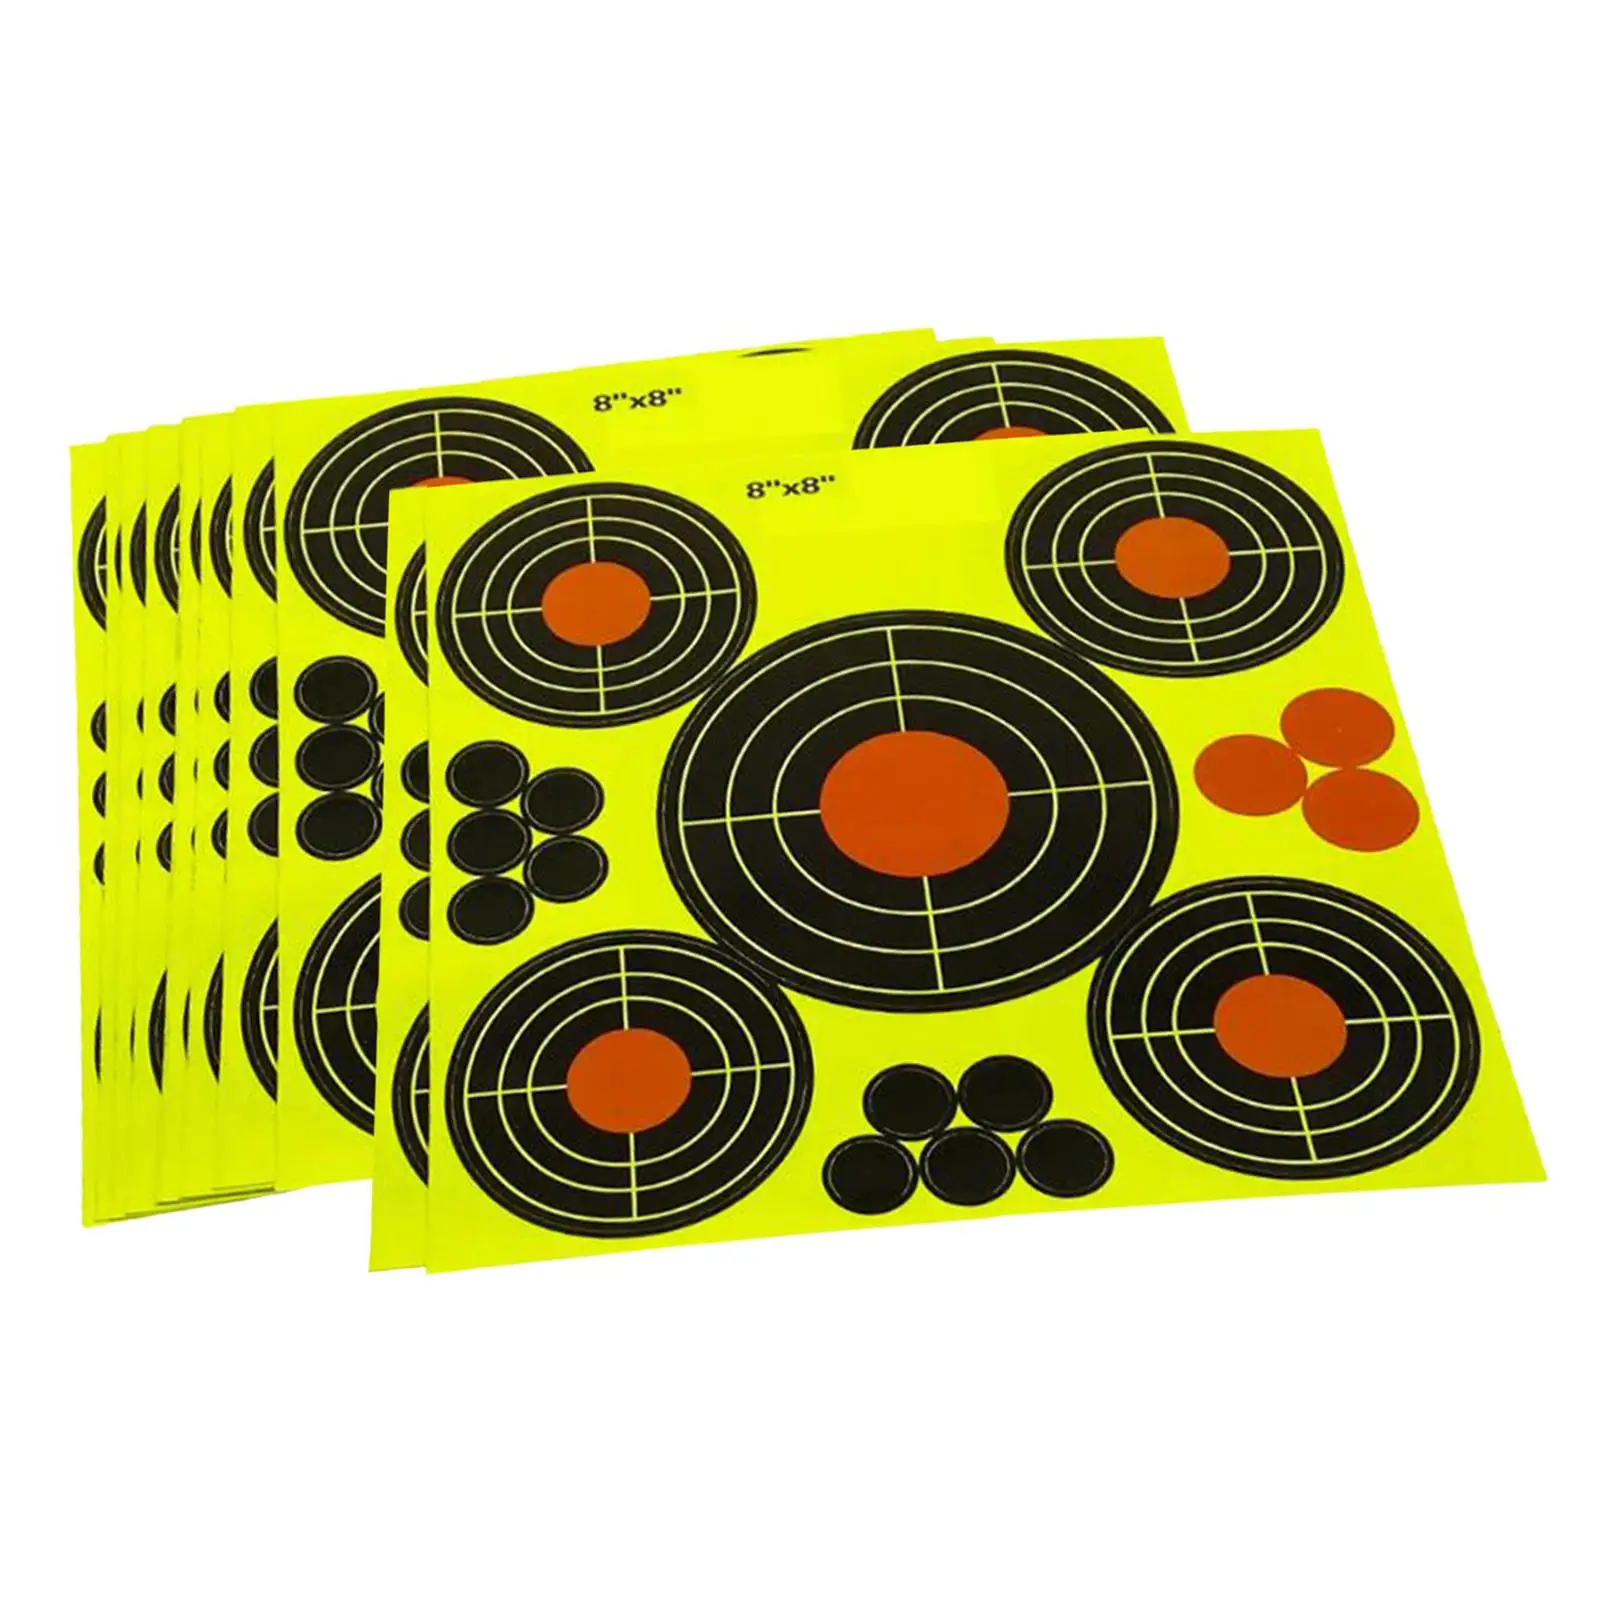 10x 8inch Splash Targets Shooting Practice Outdoor Training Splatter Accessories Round Self Adhesive Target Stickers Aim